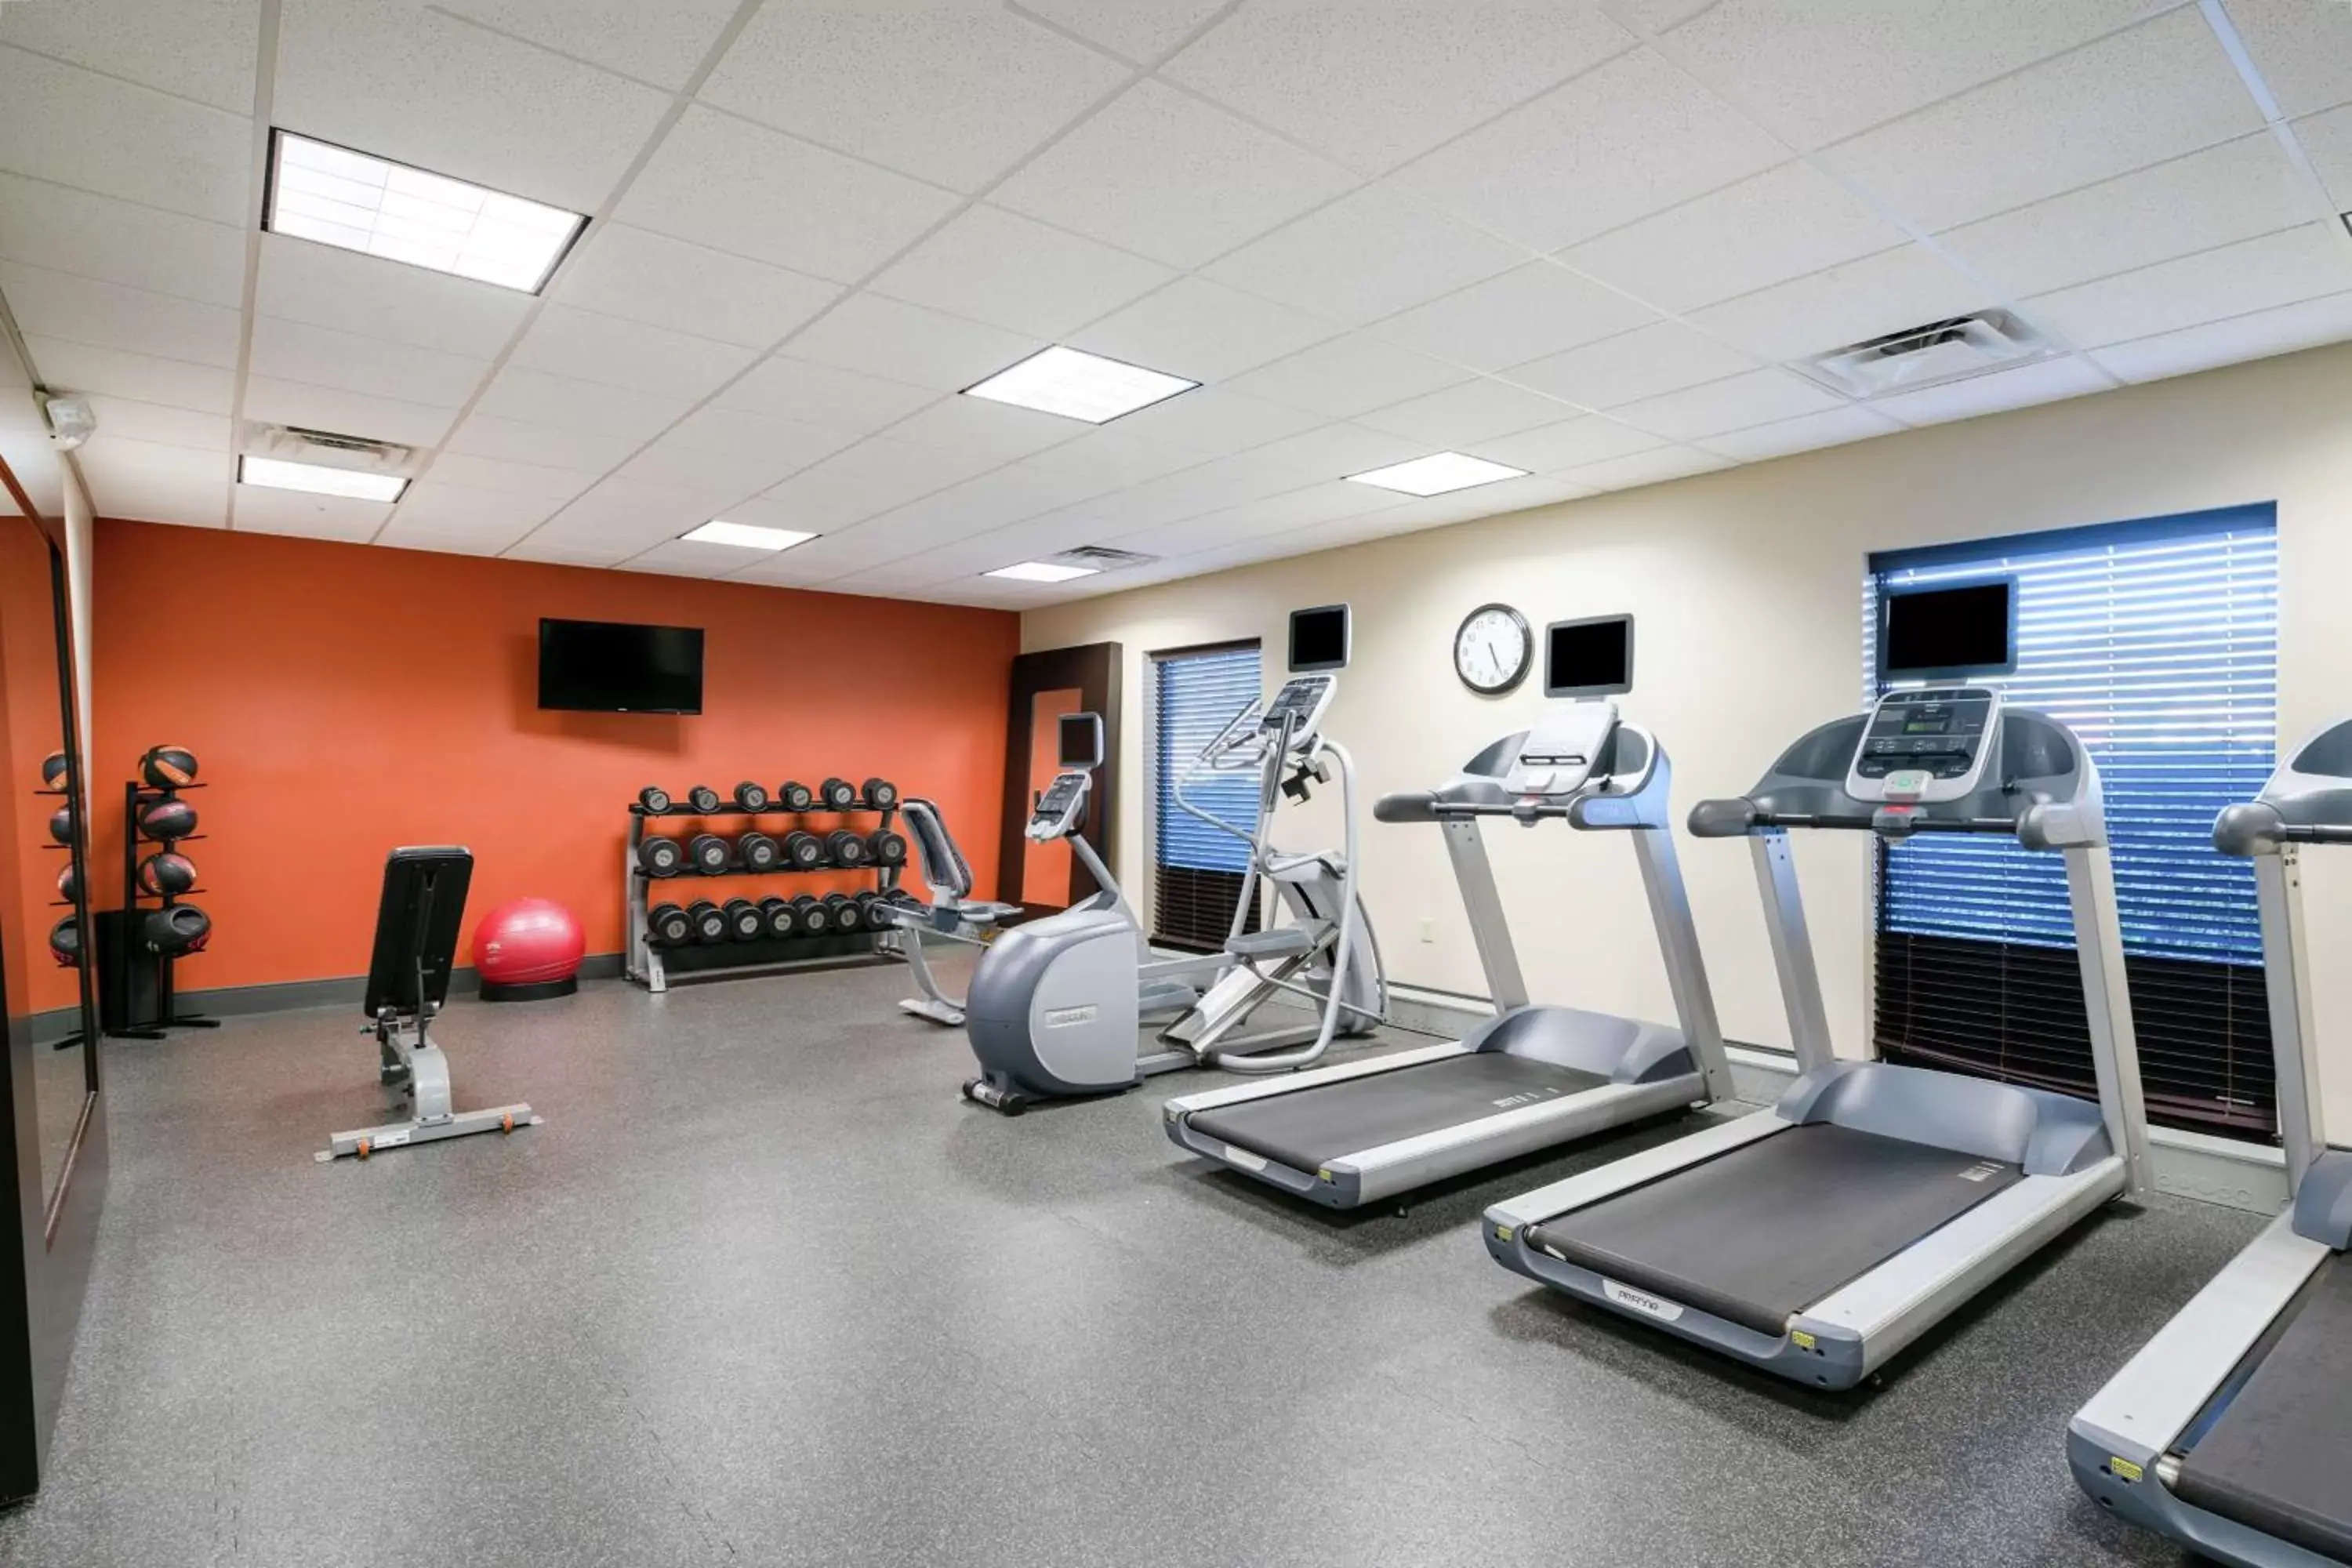 Fitness centre/facilities, Fitness Center/Facilities in Hampton Inn University Area, Huntington, Wv